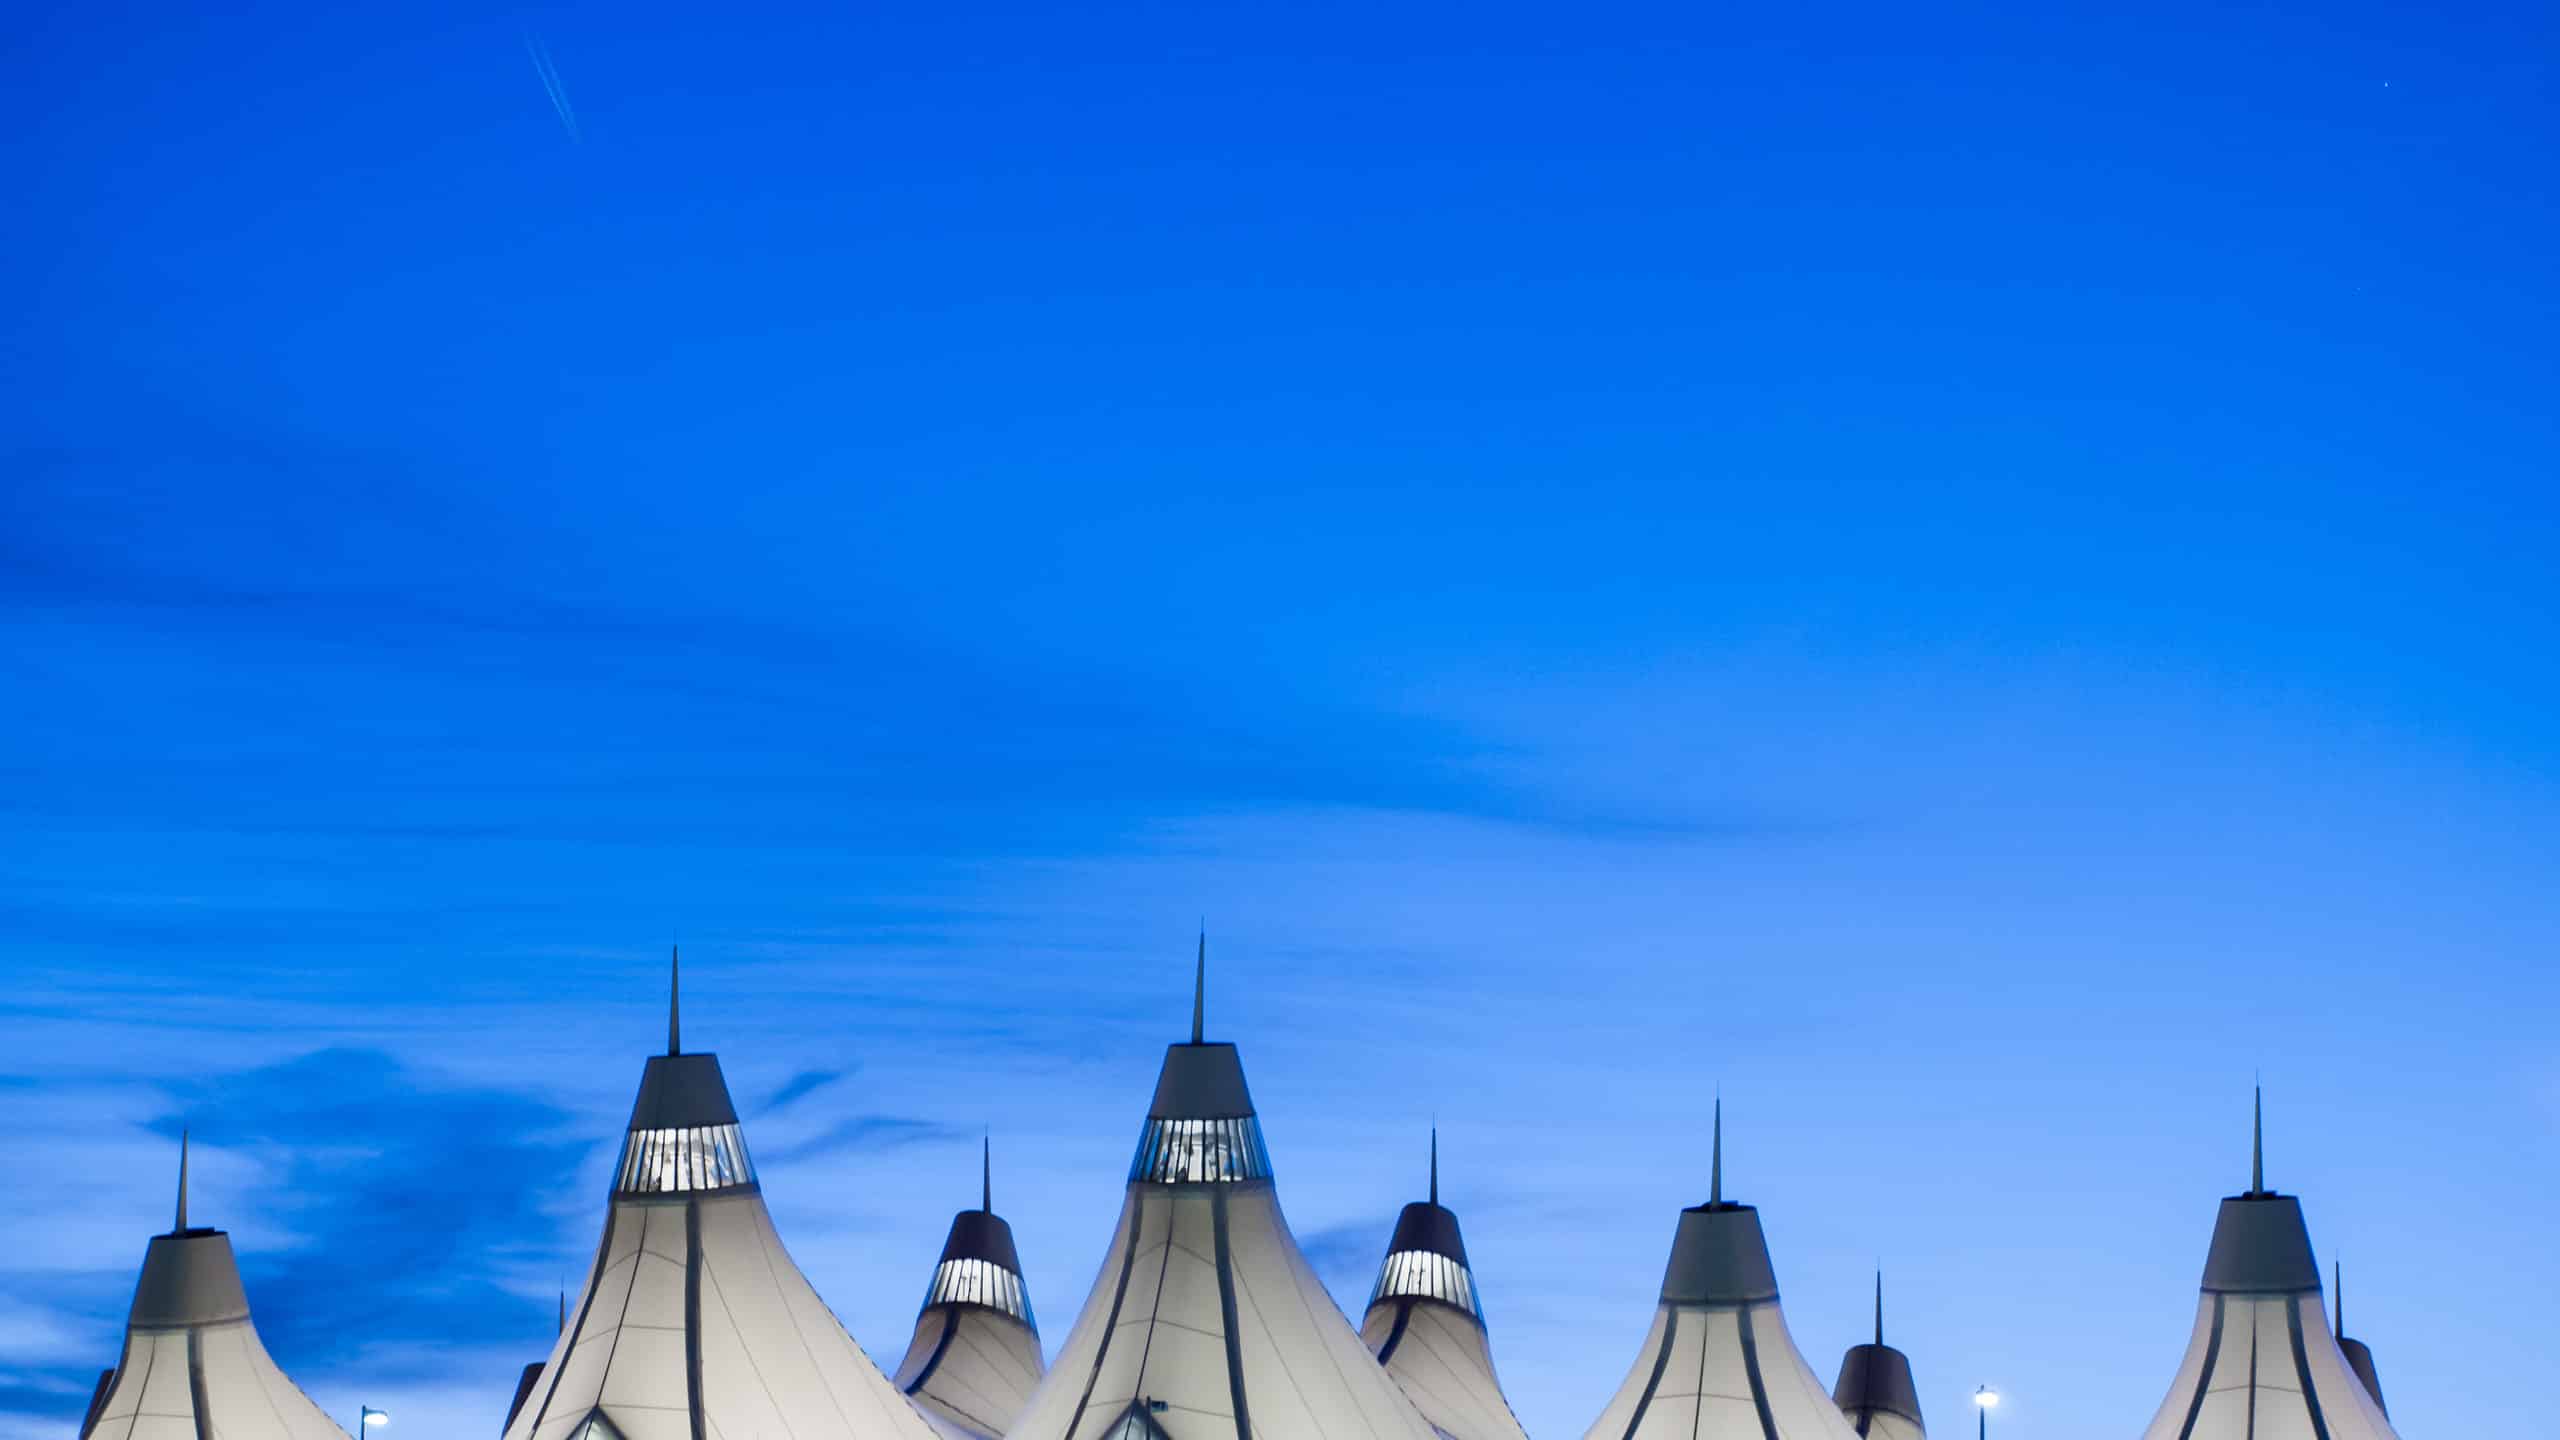 Denver International Airport (DIA) Glowing Tents